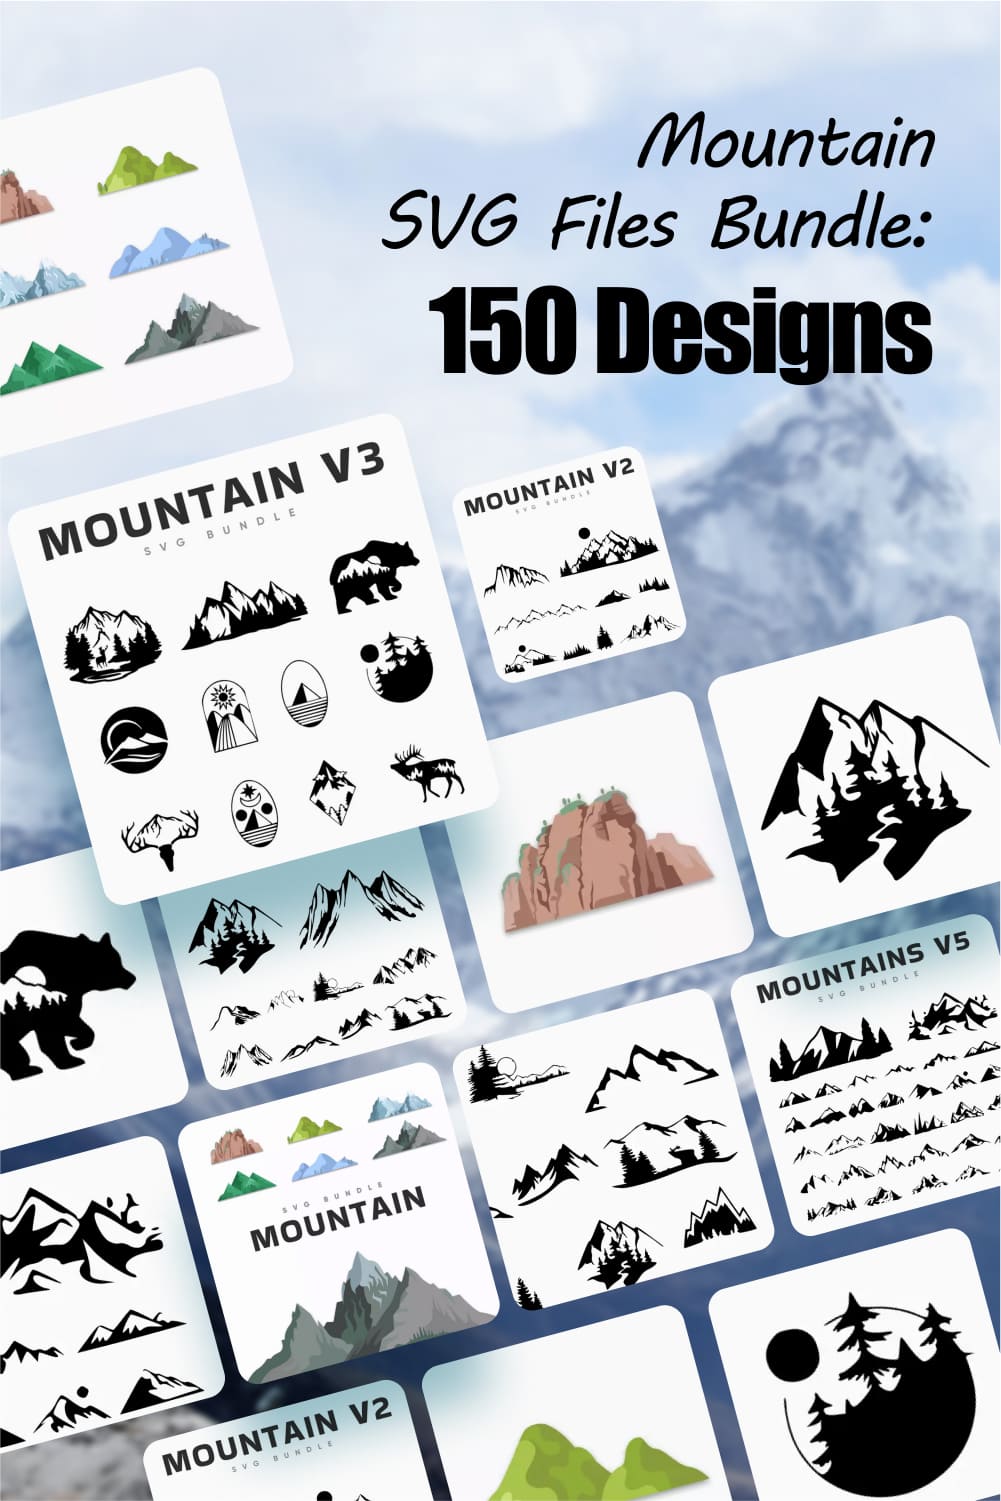 Mountain SVG Files Bundle 150 Designs Pinterest.